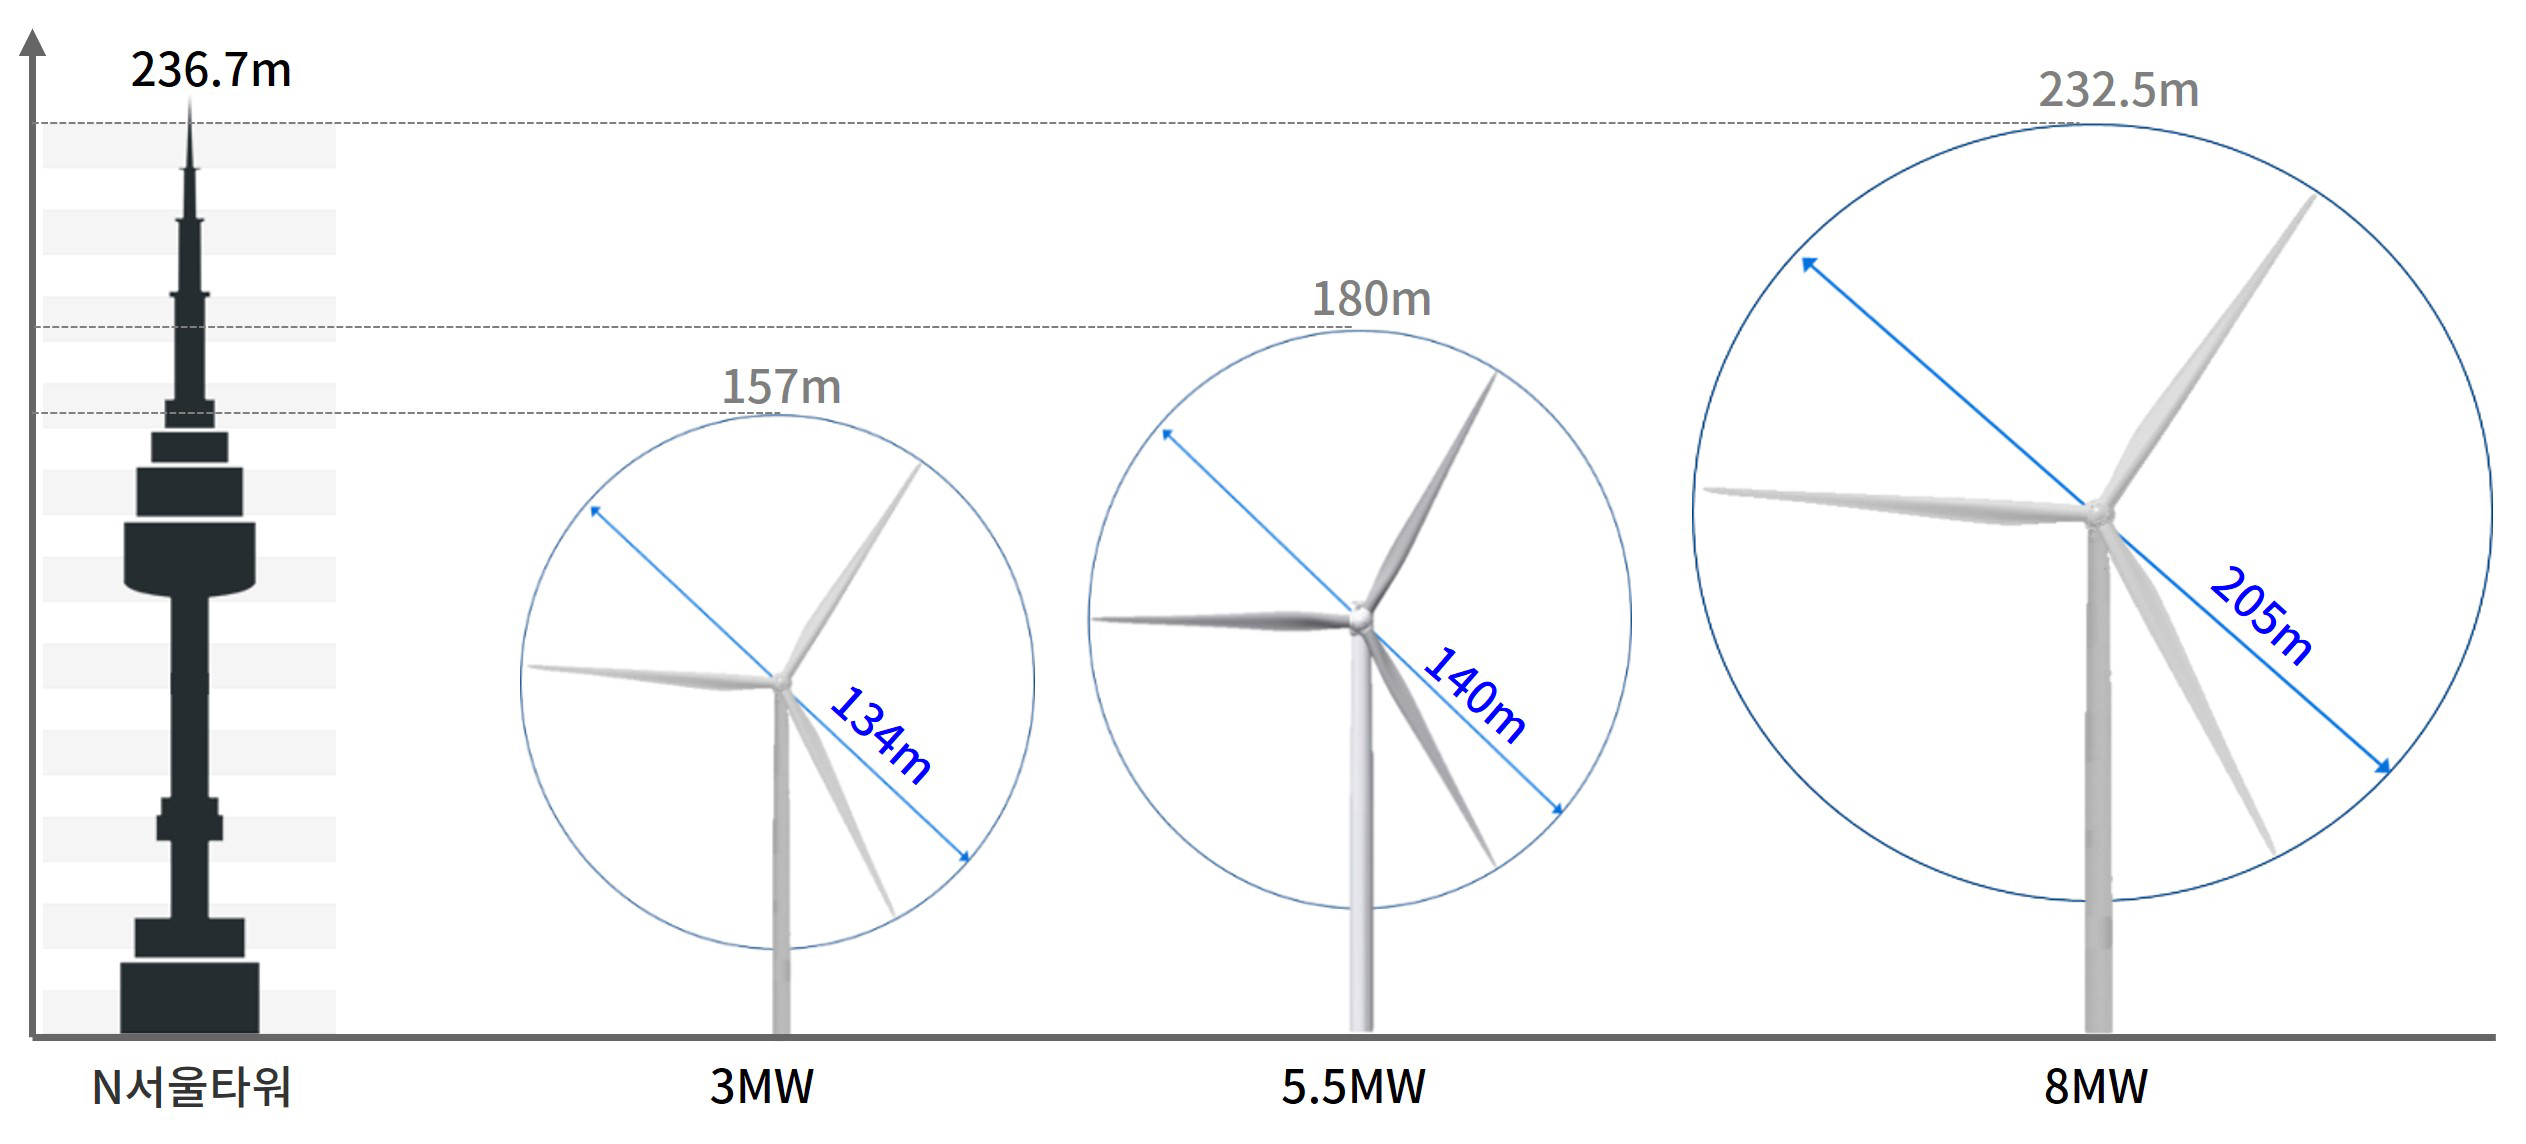 Figure. Height comparison of Doosan’s wind turbine model vs. N Seoul Tower